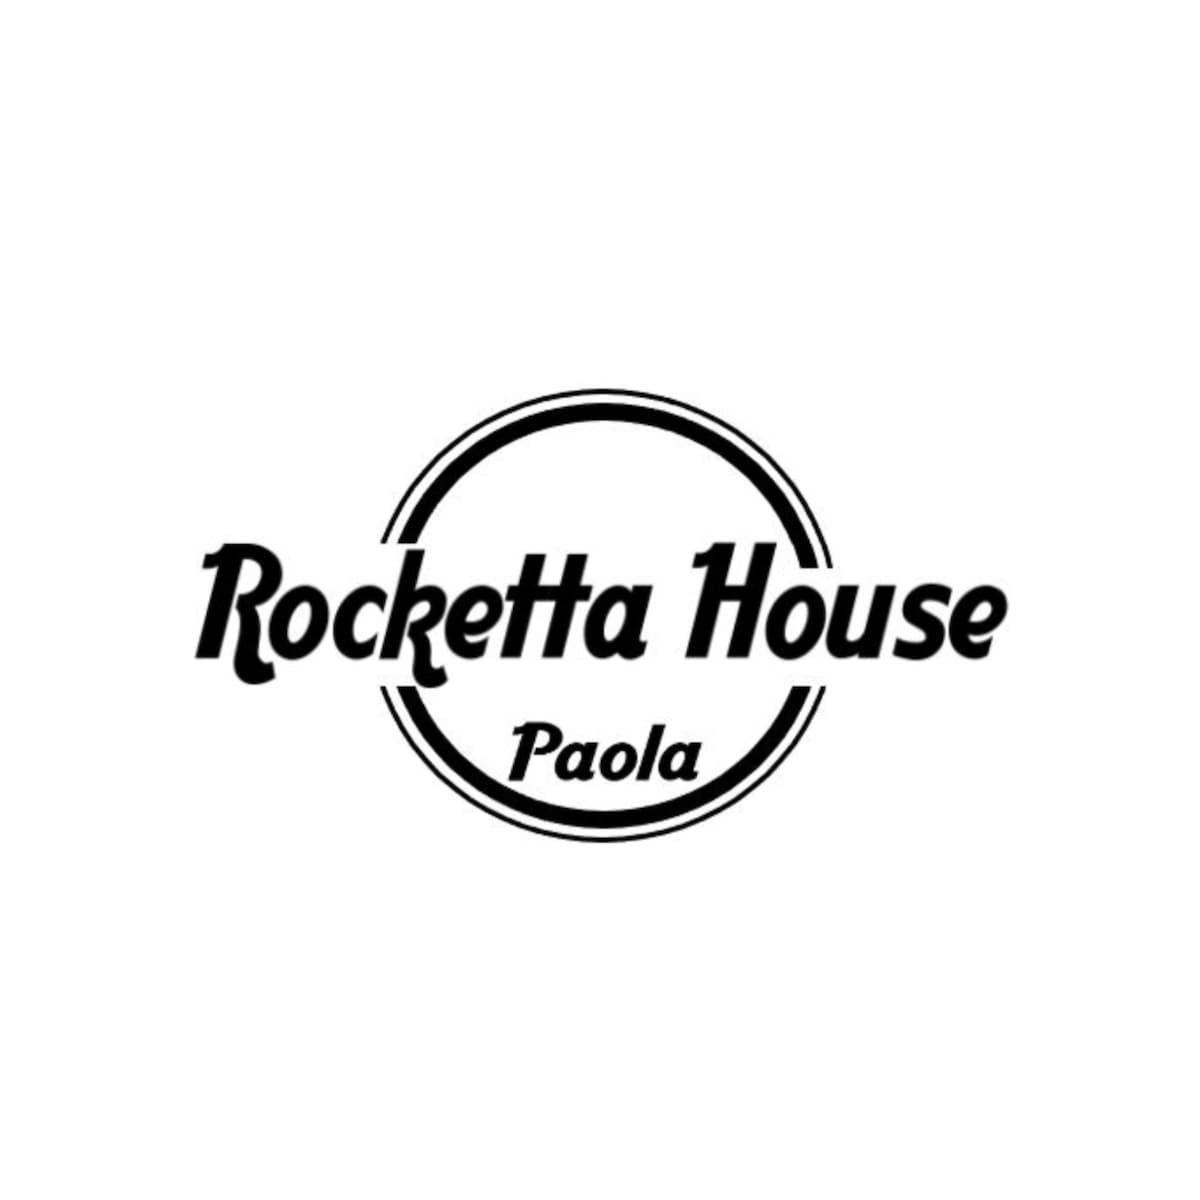 Rocketta House - Paola